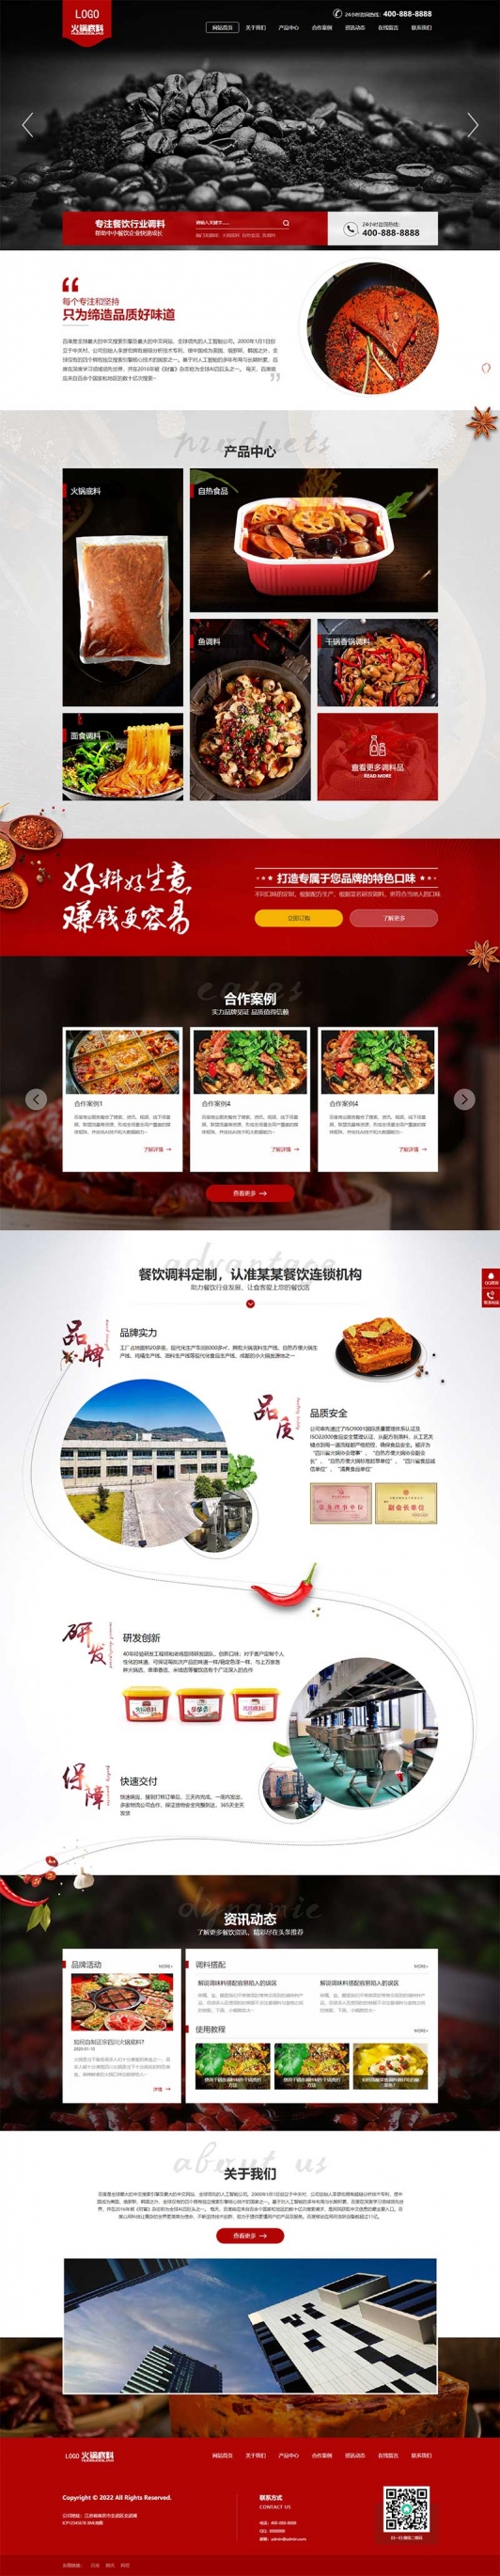 (PC+WAP)pbootcms高端火锅底料食品调料网站模板 营销型餐饮美食网站源码